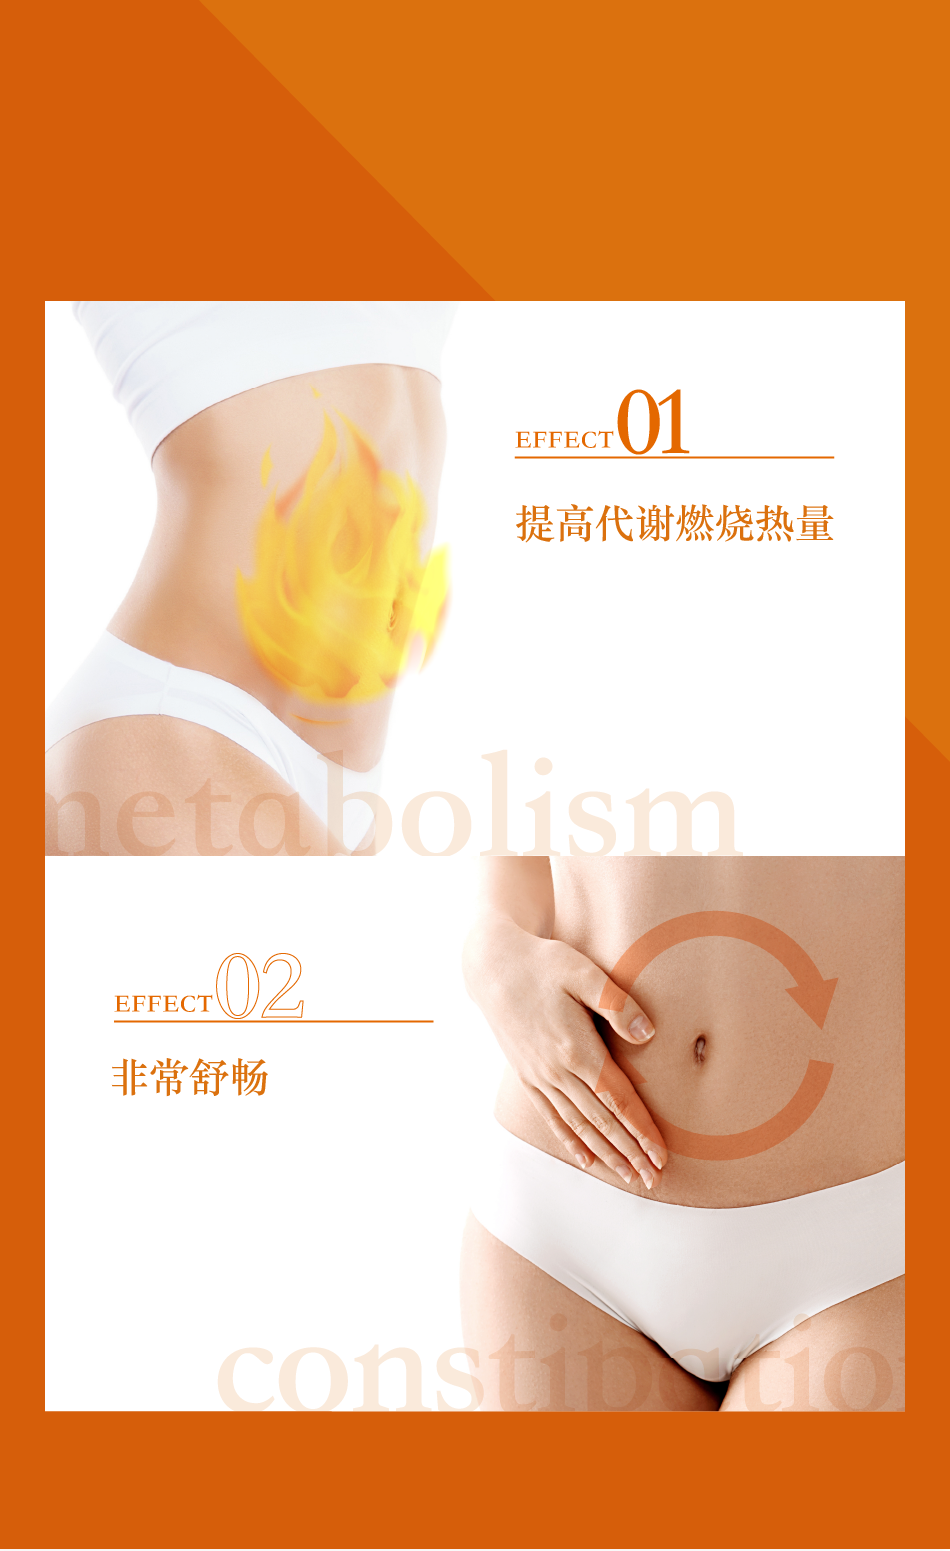 EFFECT01 提高代谢燃烧热量 metabolism EFFECT 02 非常舒畅 constipation